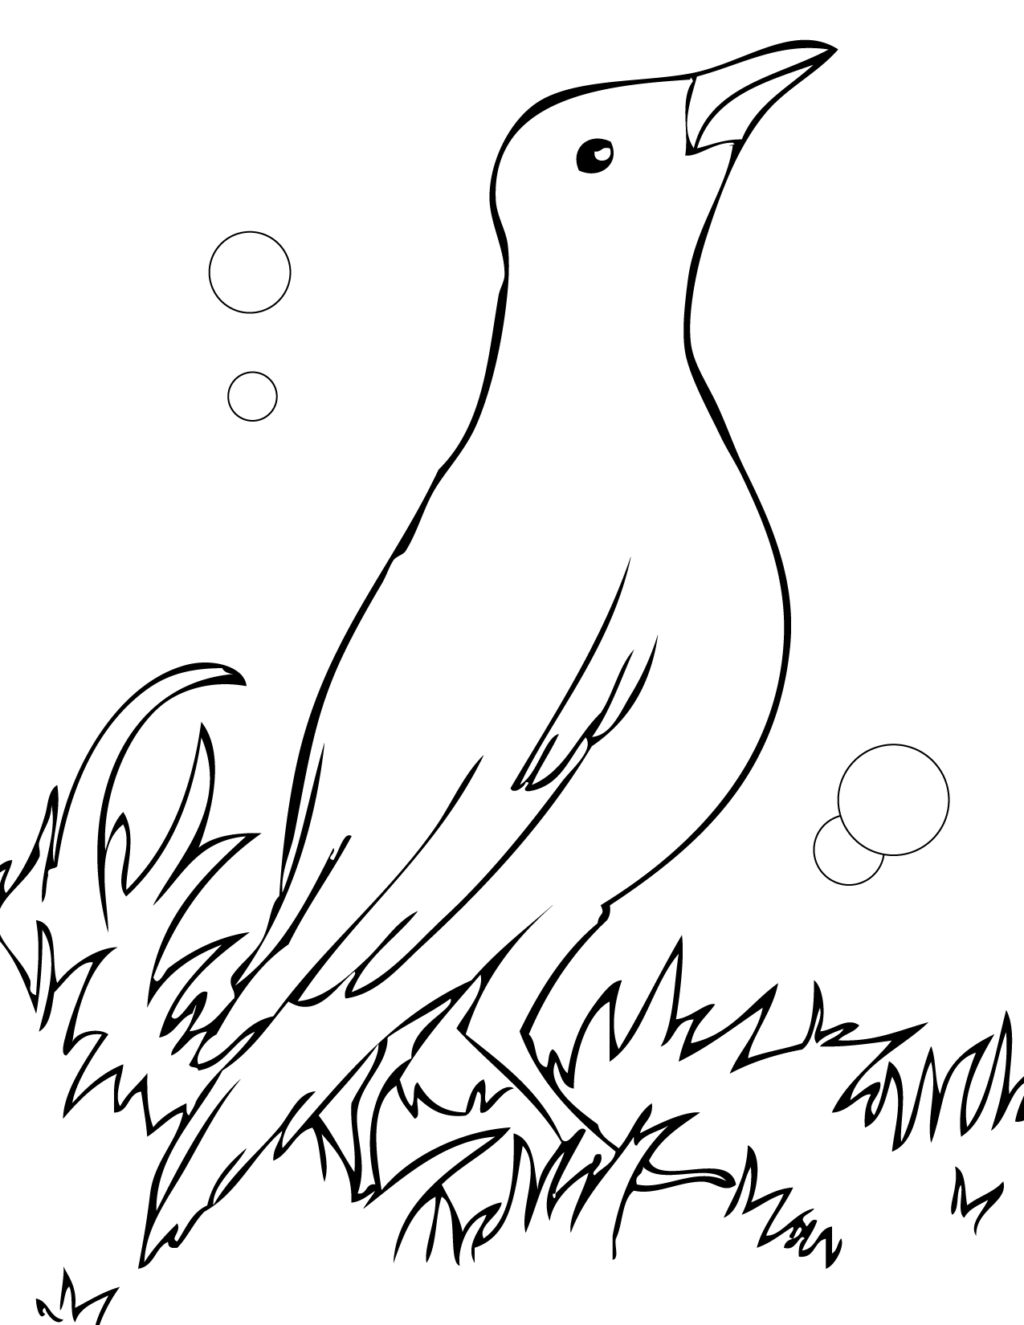 Common Blackbird coloring, Download Common Blackbird coloring for free 2019